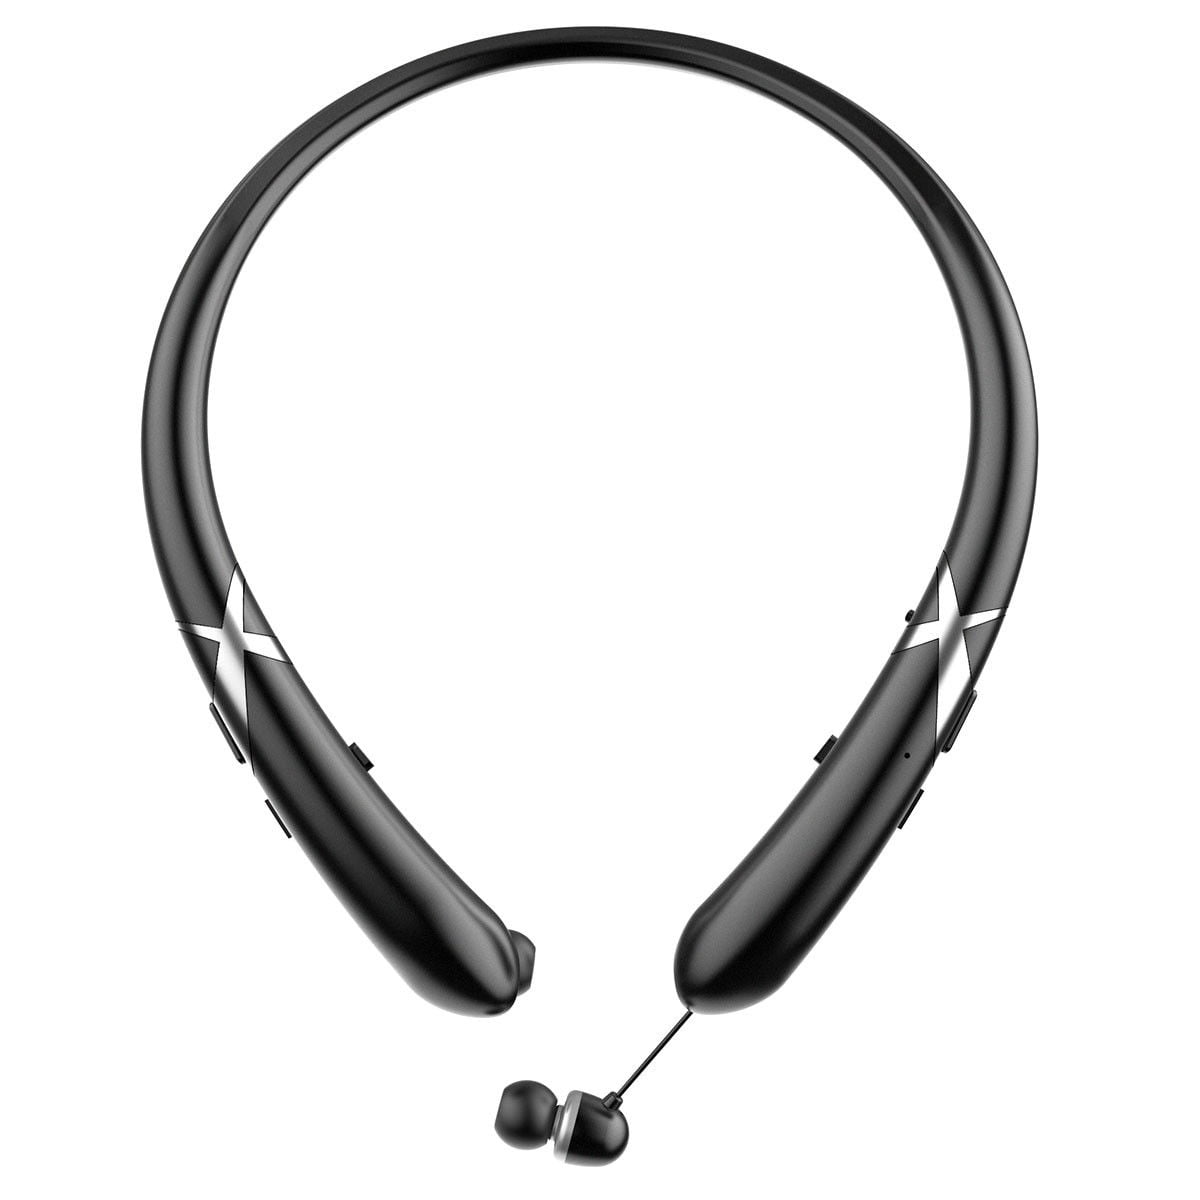 Wireless Bluetooth 5.0 Neckband Super Bass Music Headphones Earbuds Sport Headsets Earphones, Water & Sweat Resistant(Black)